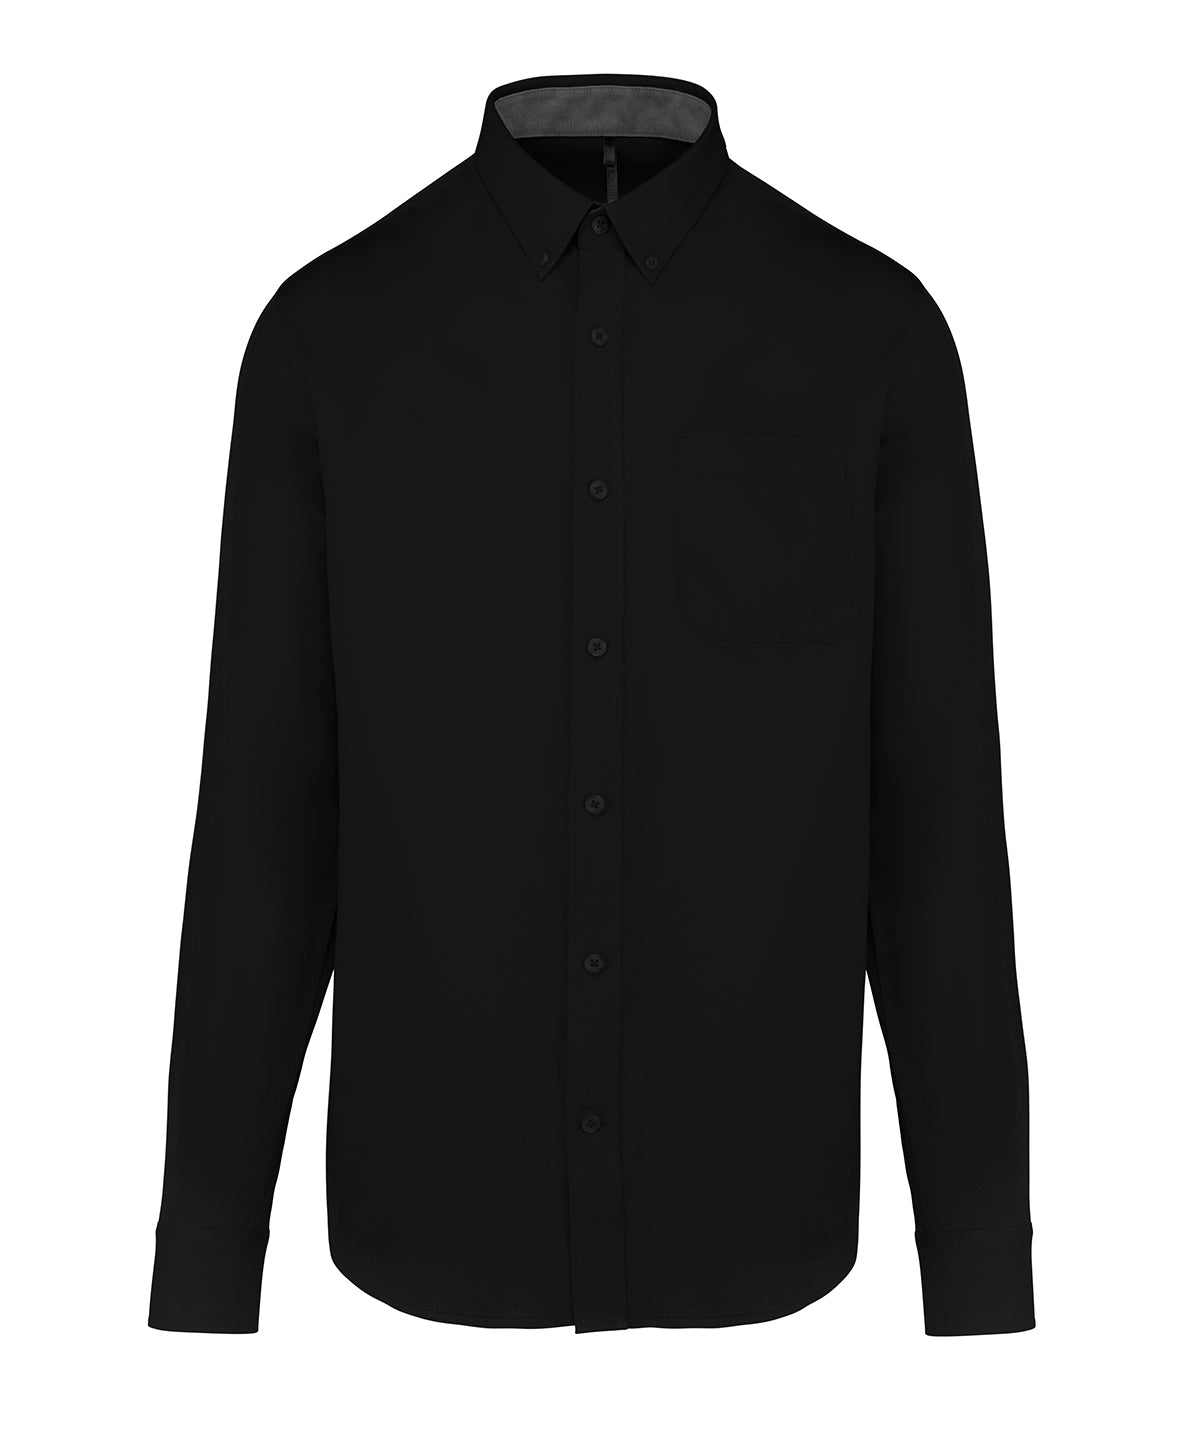 Bolir - Men's Nevada Long Sleeve Cotton Shirt